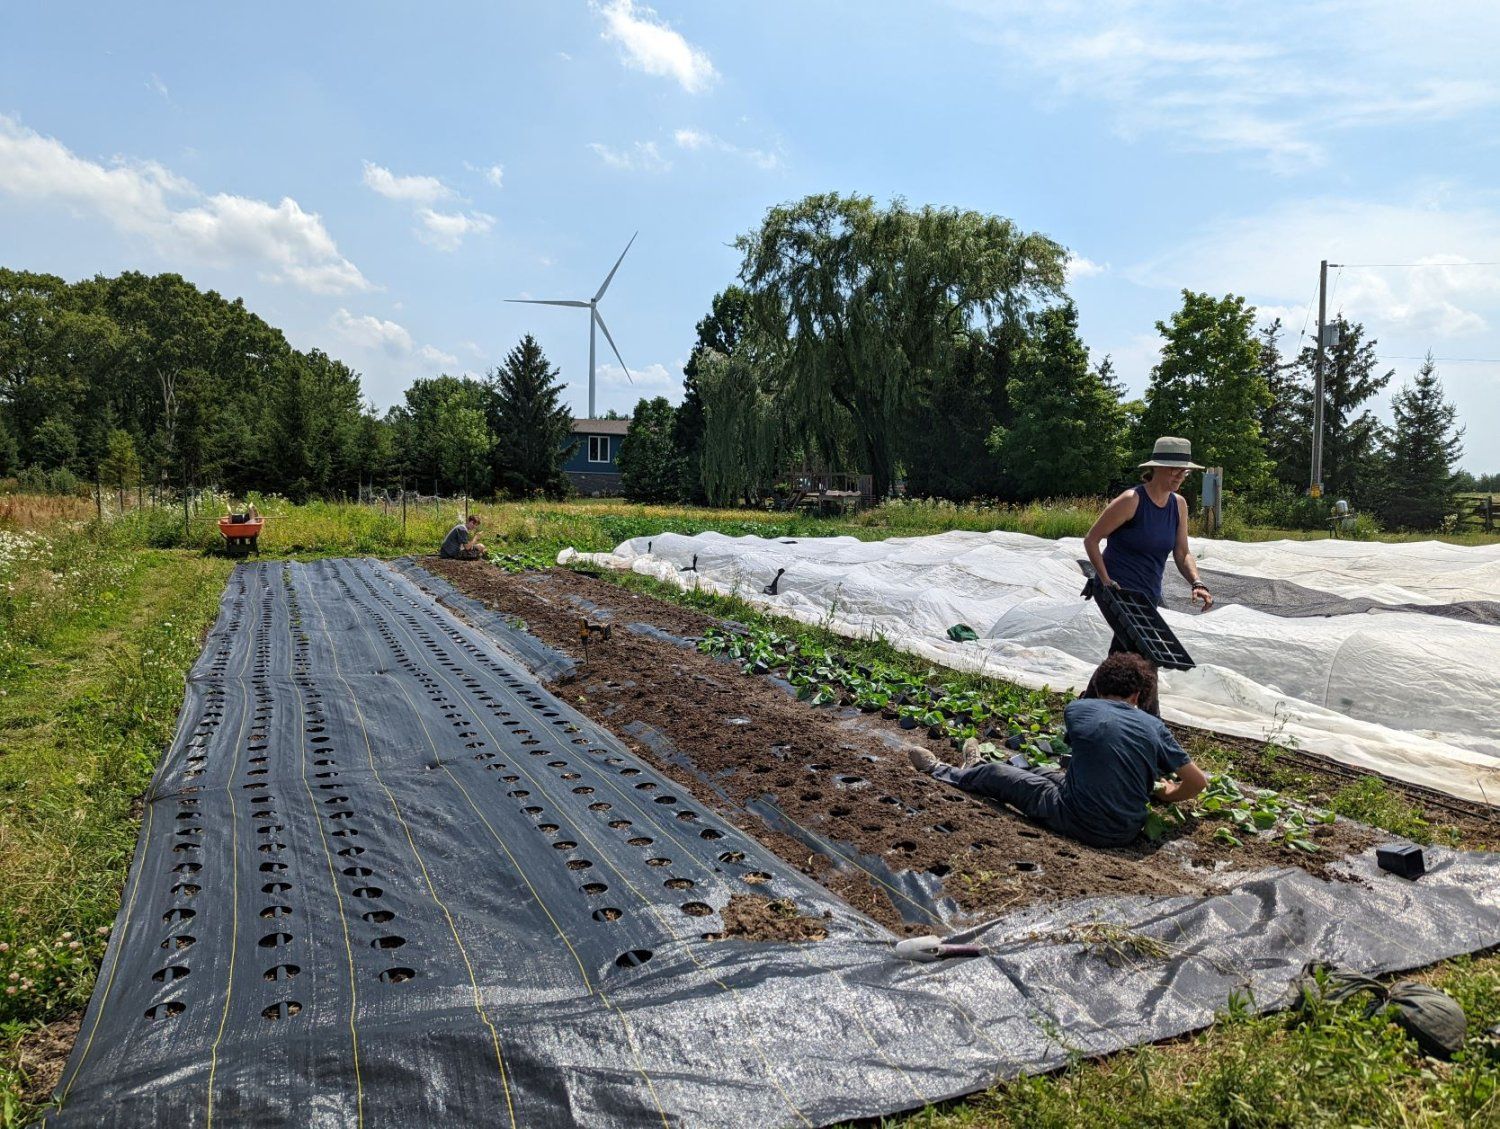 Previous Happening: 2022 Farm Share Week 8 - Summer Picking + Fall Planting